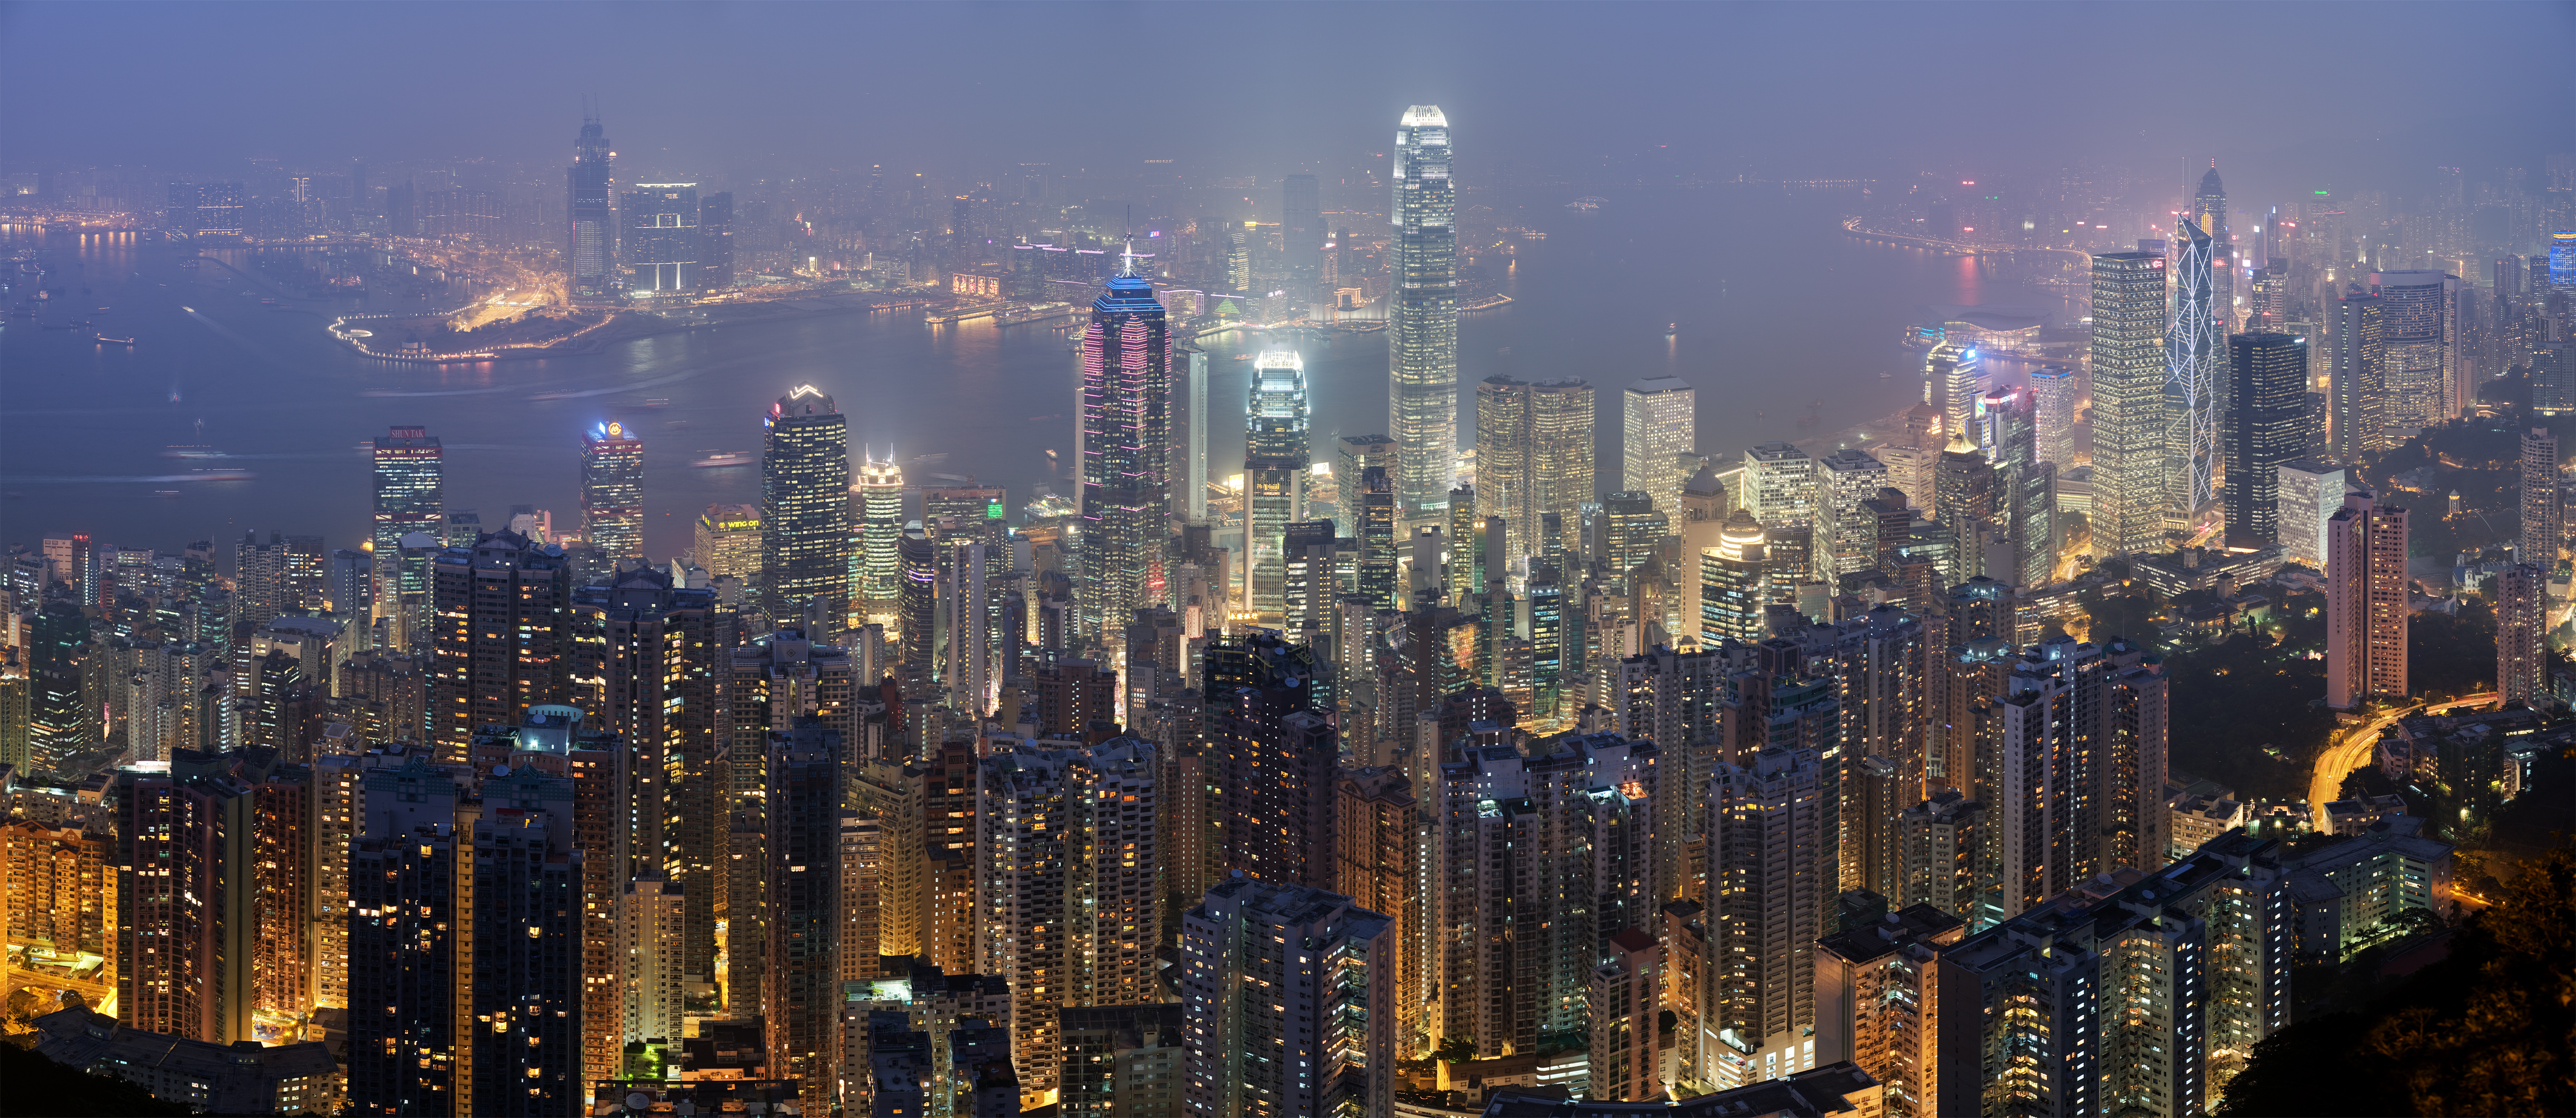 File:Hong Kong Skyline Restitch - Dec 2007.jpg - Wikipedia